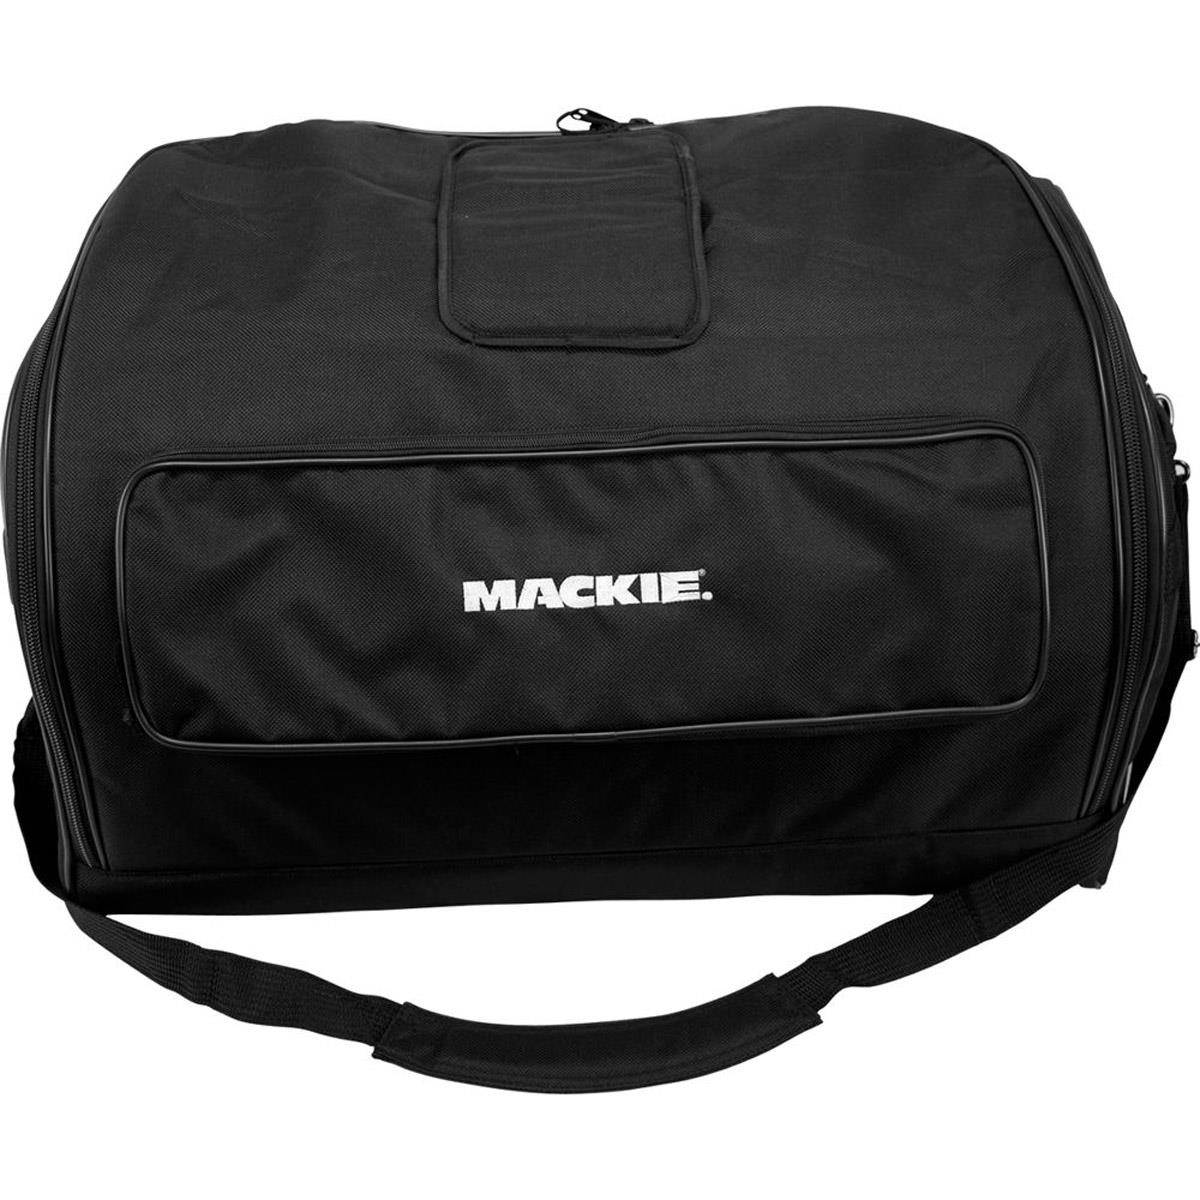 Image of Mackie Speaker Bag for SRM350 and C200 Speakers